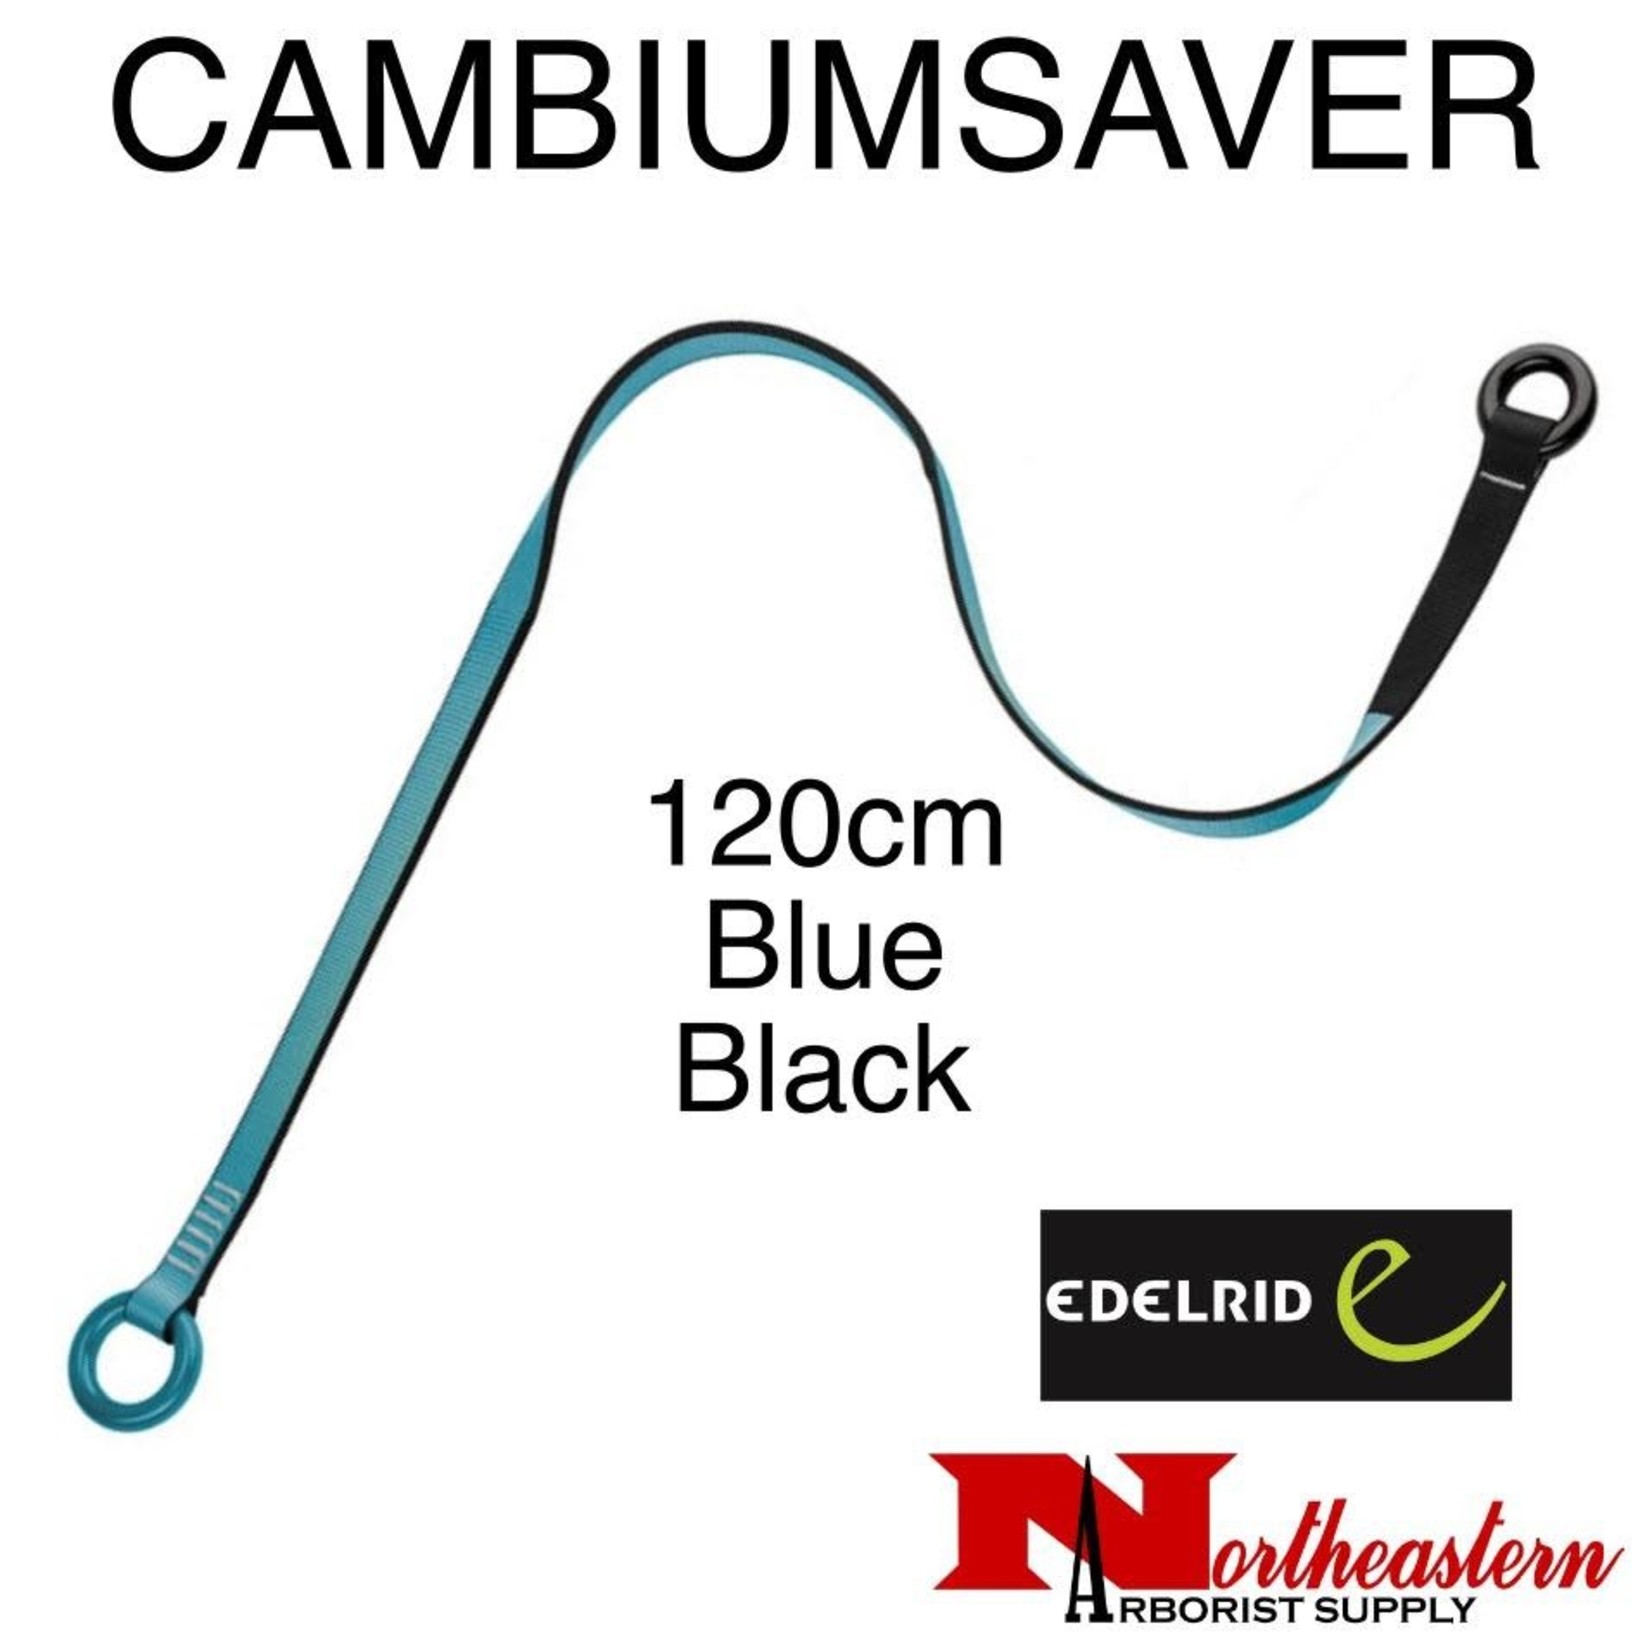 EDELRID Cambiumsaver 120Cm, Blue + Black, 25 Kn